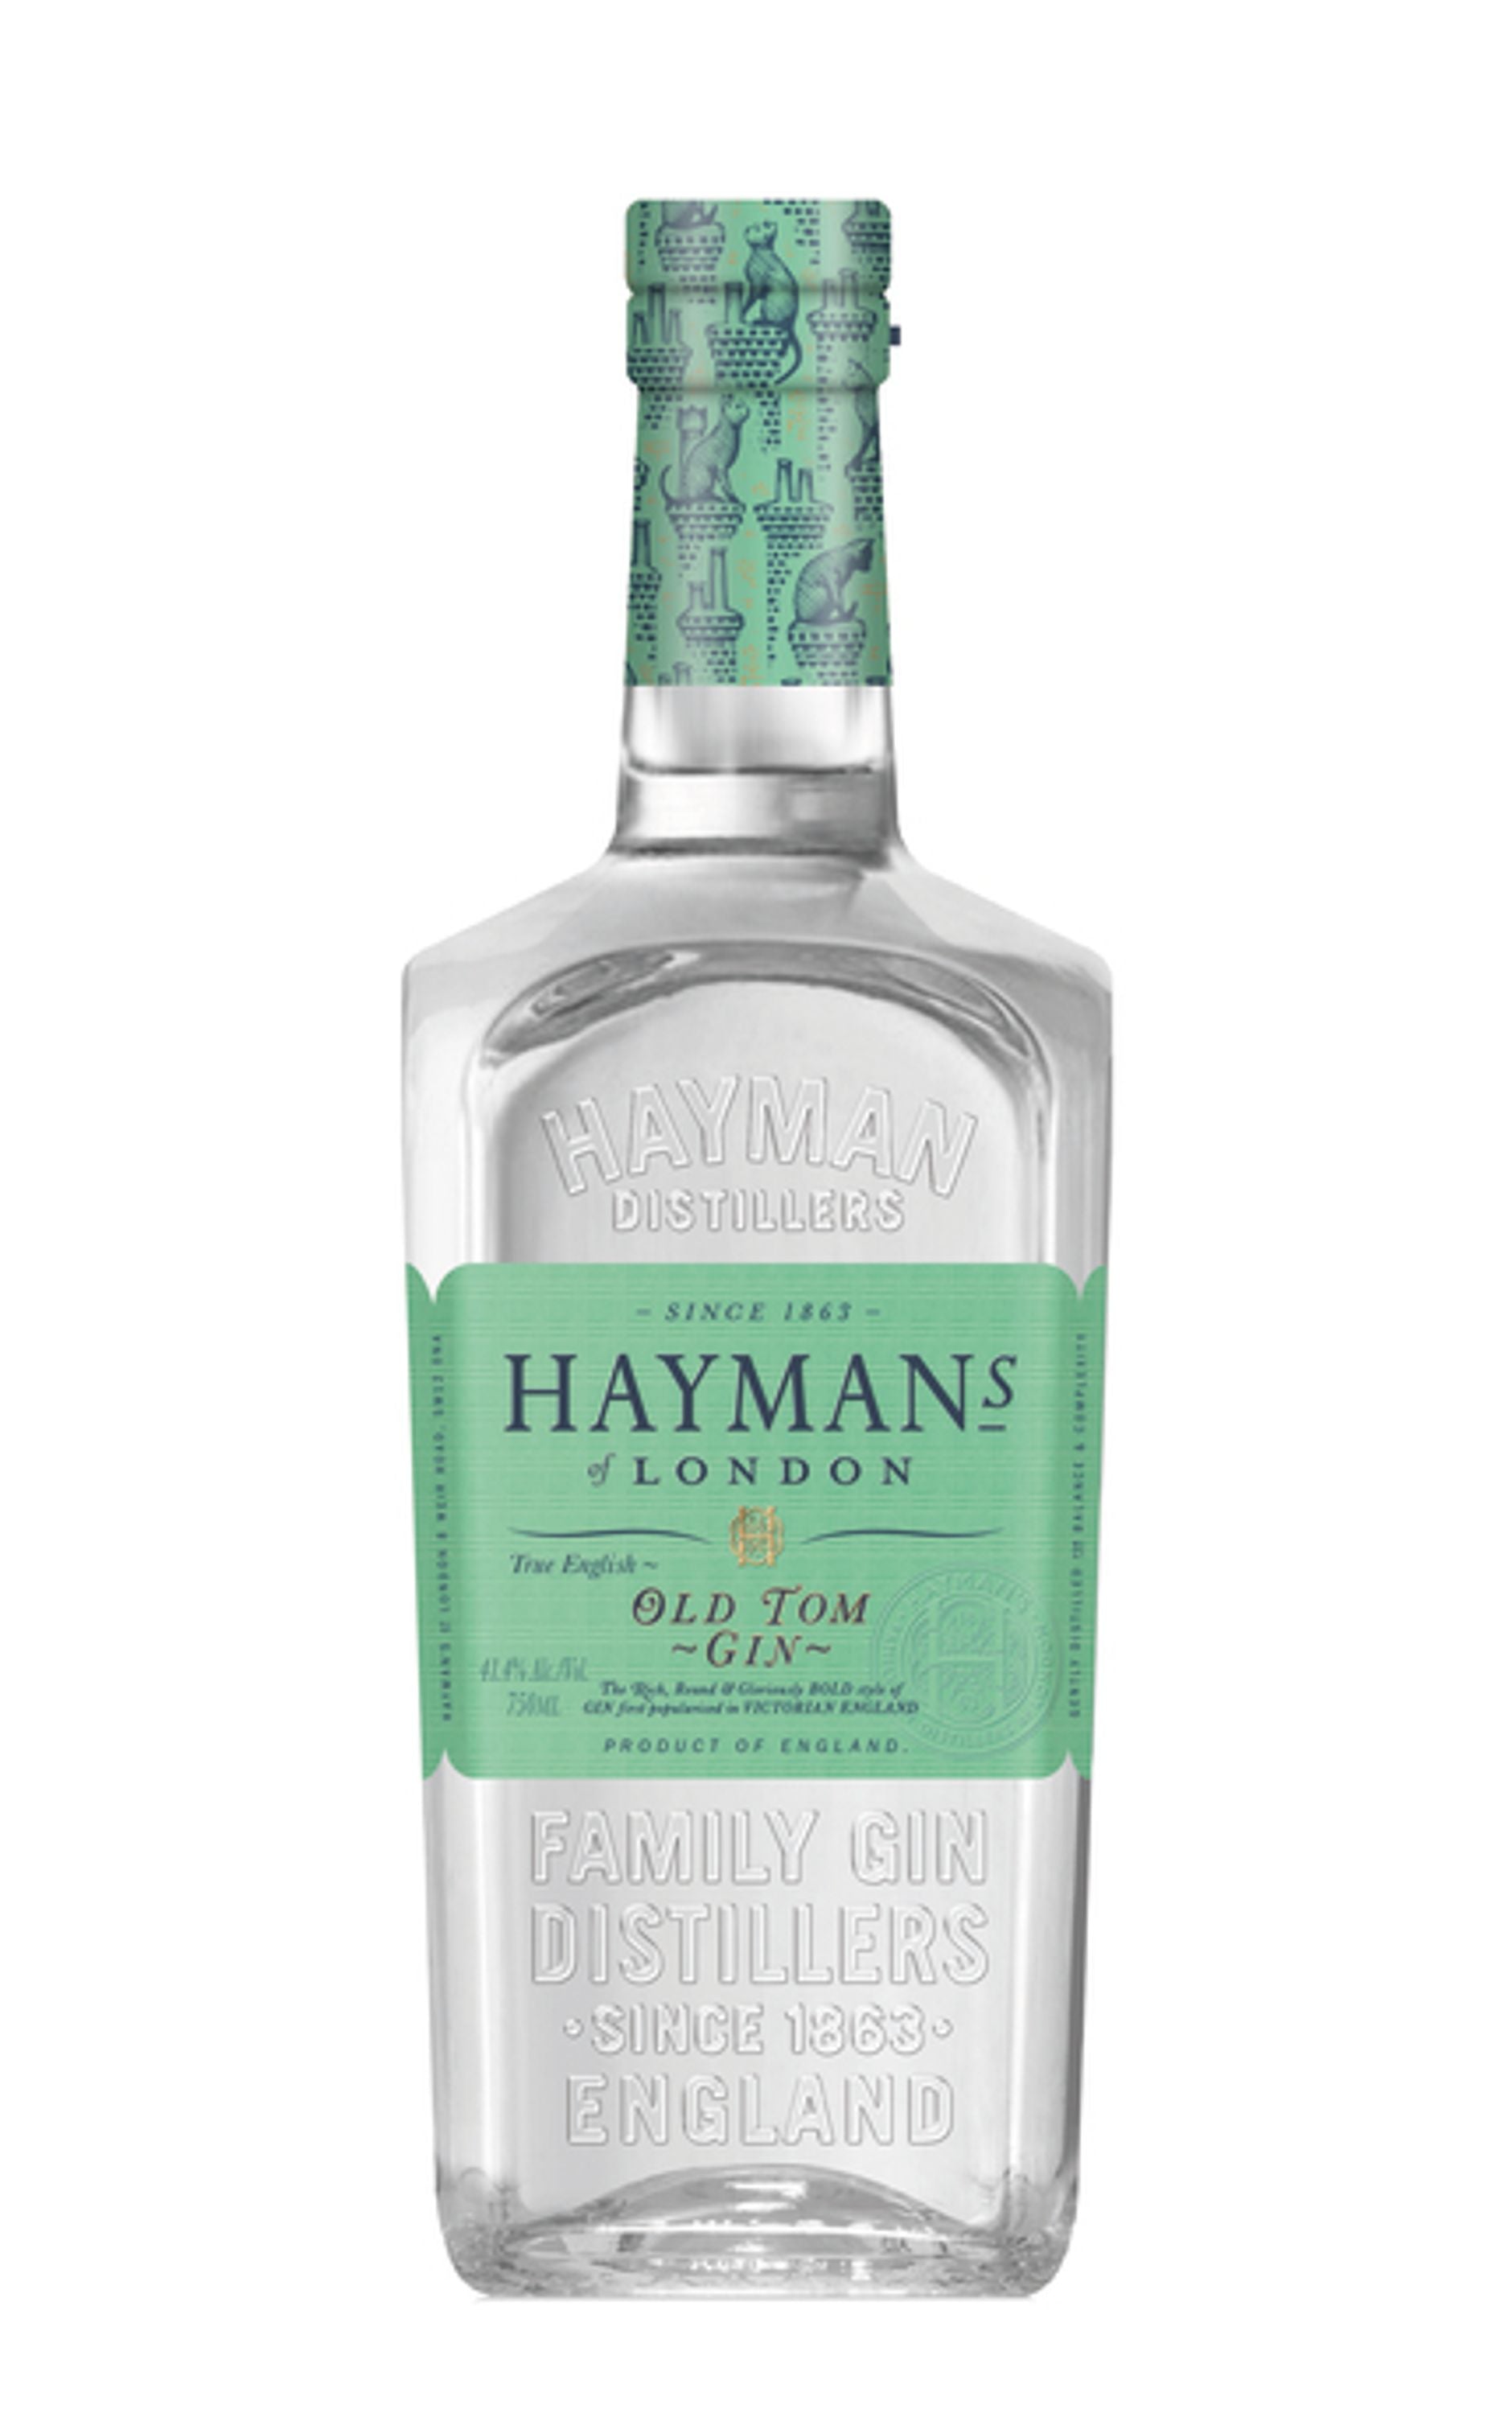 Hayman's Old Tom Gin 0.7l, alc. 41.4% ABV, Gin England